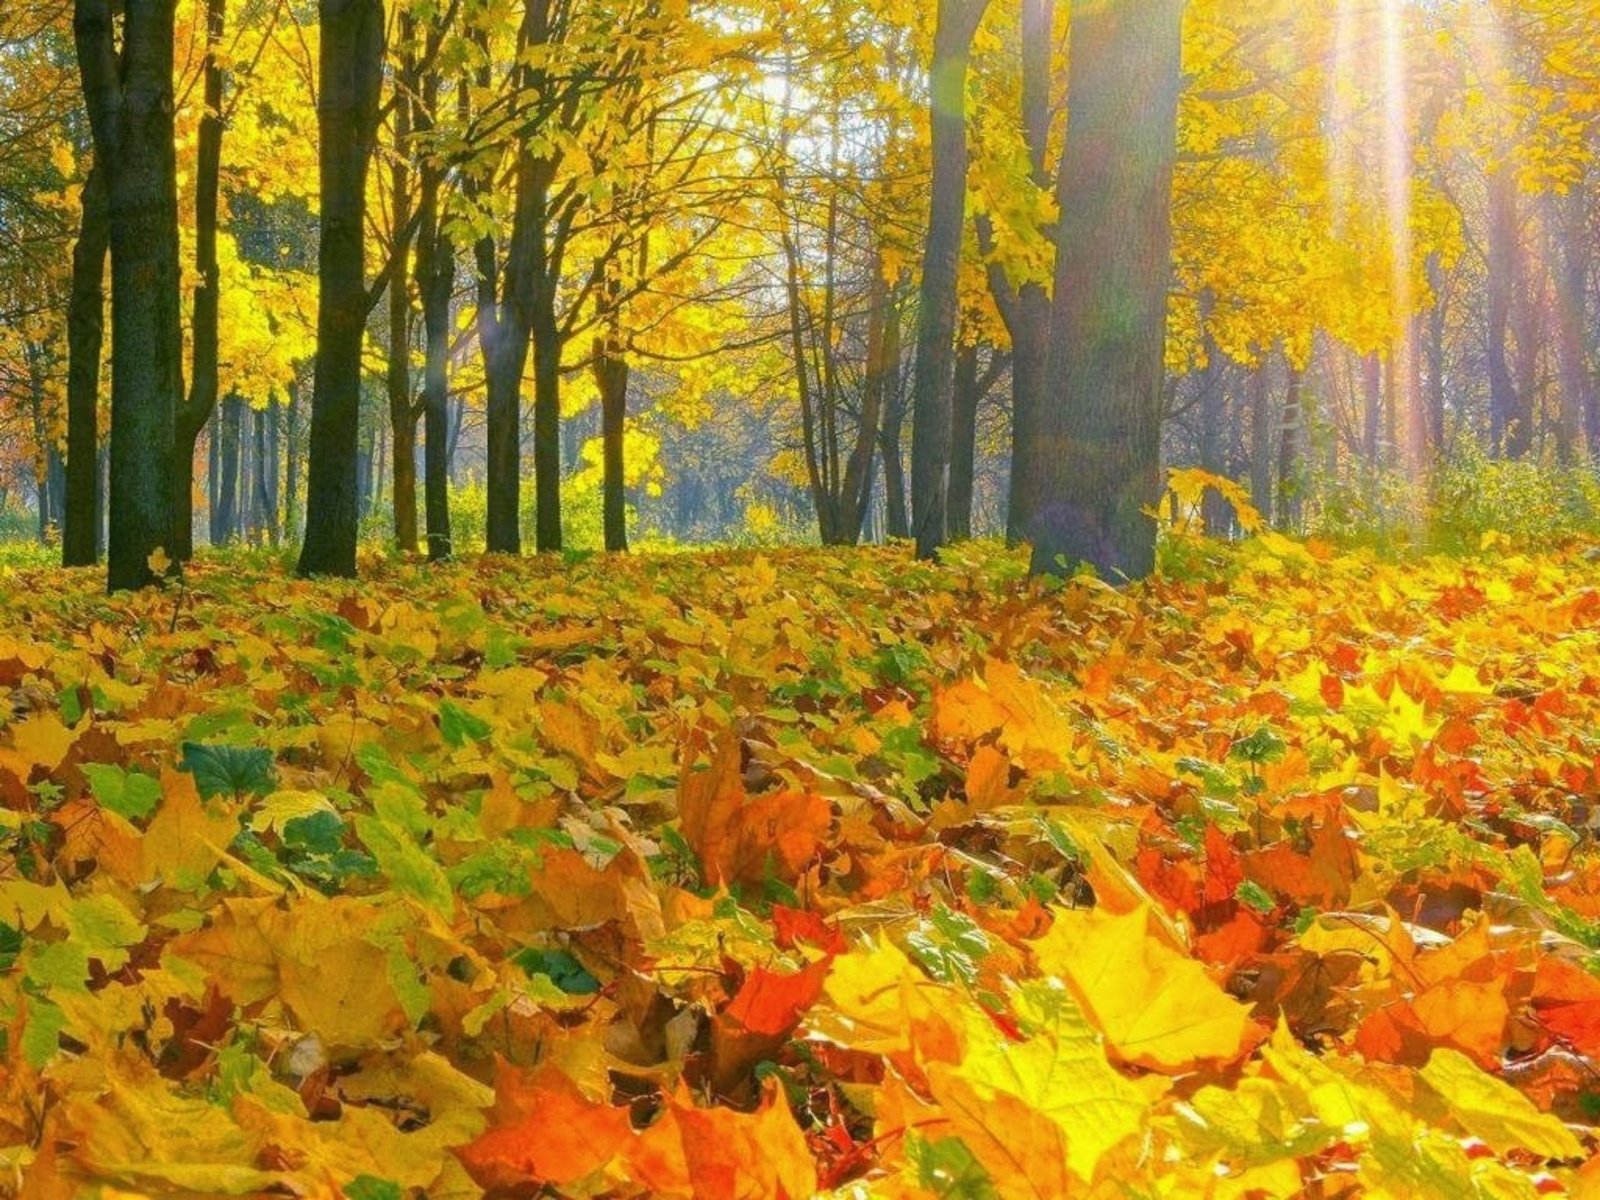 Осеннее богатство. Осень. Листопад в лесу. Осенний листопад. Осенний листопад в саду.